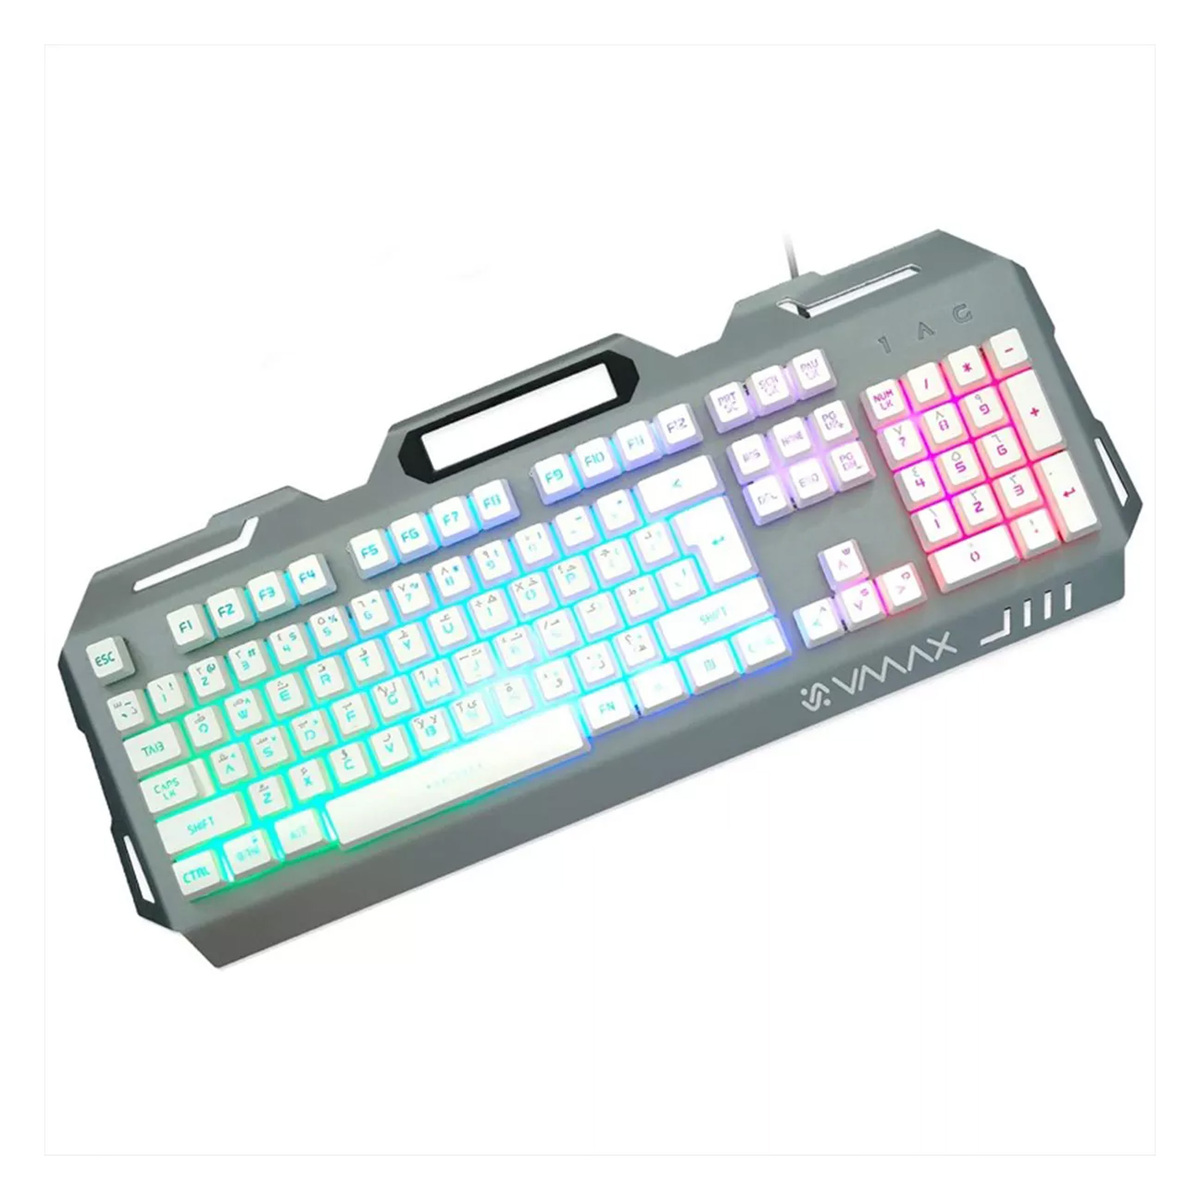 VMax Metal Gaming Keyboard, Silver, VGK611